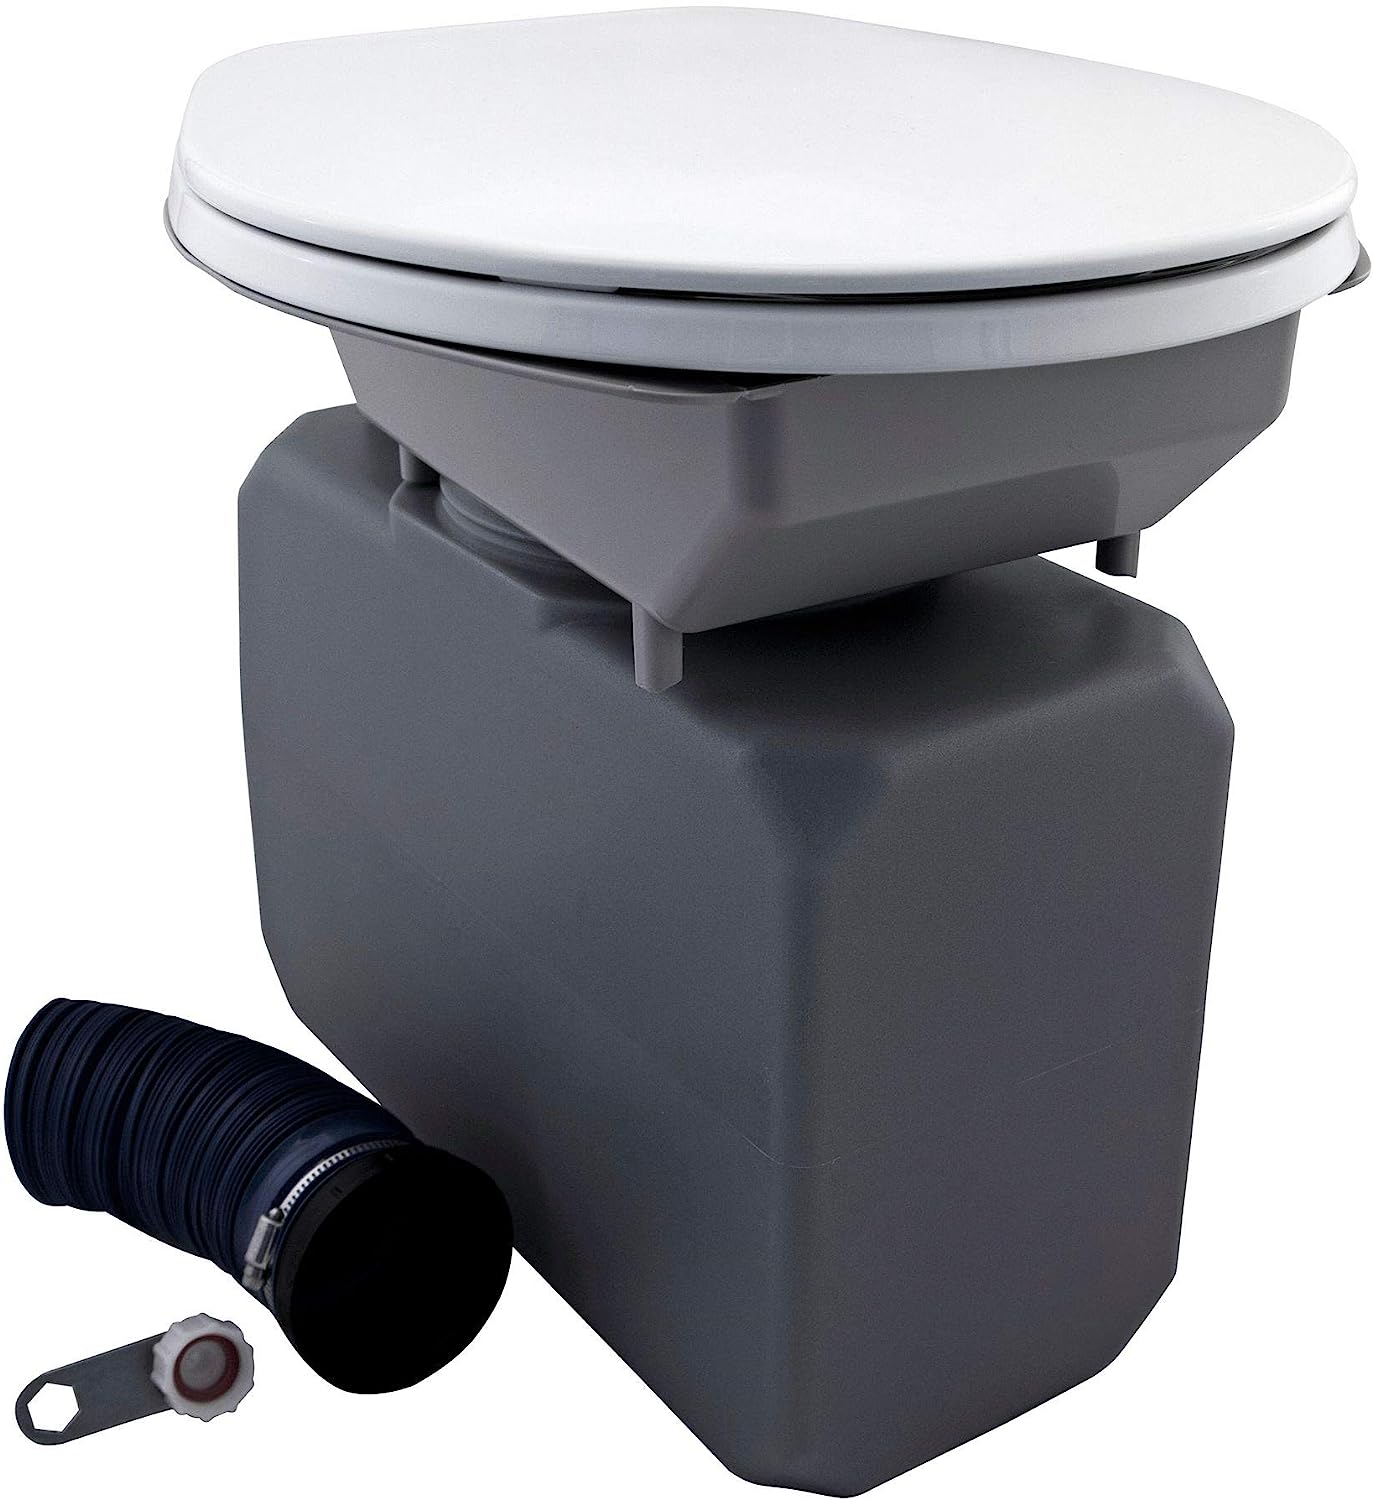 NRS ECO-Safe Toilet System